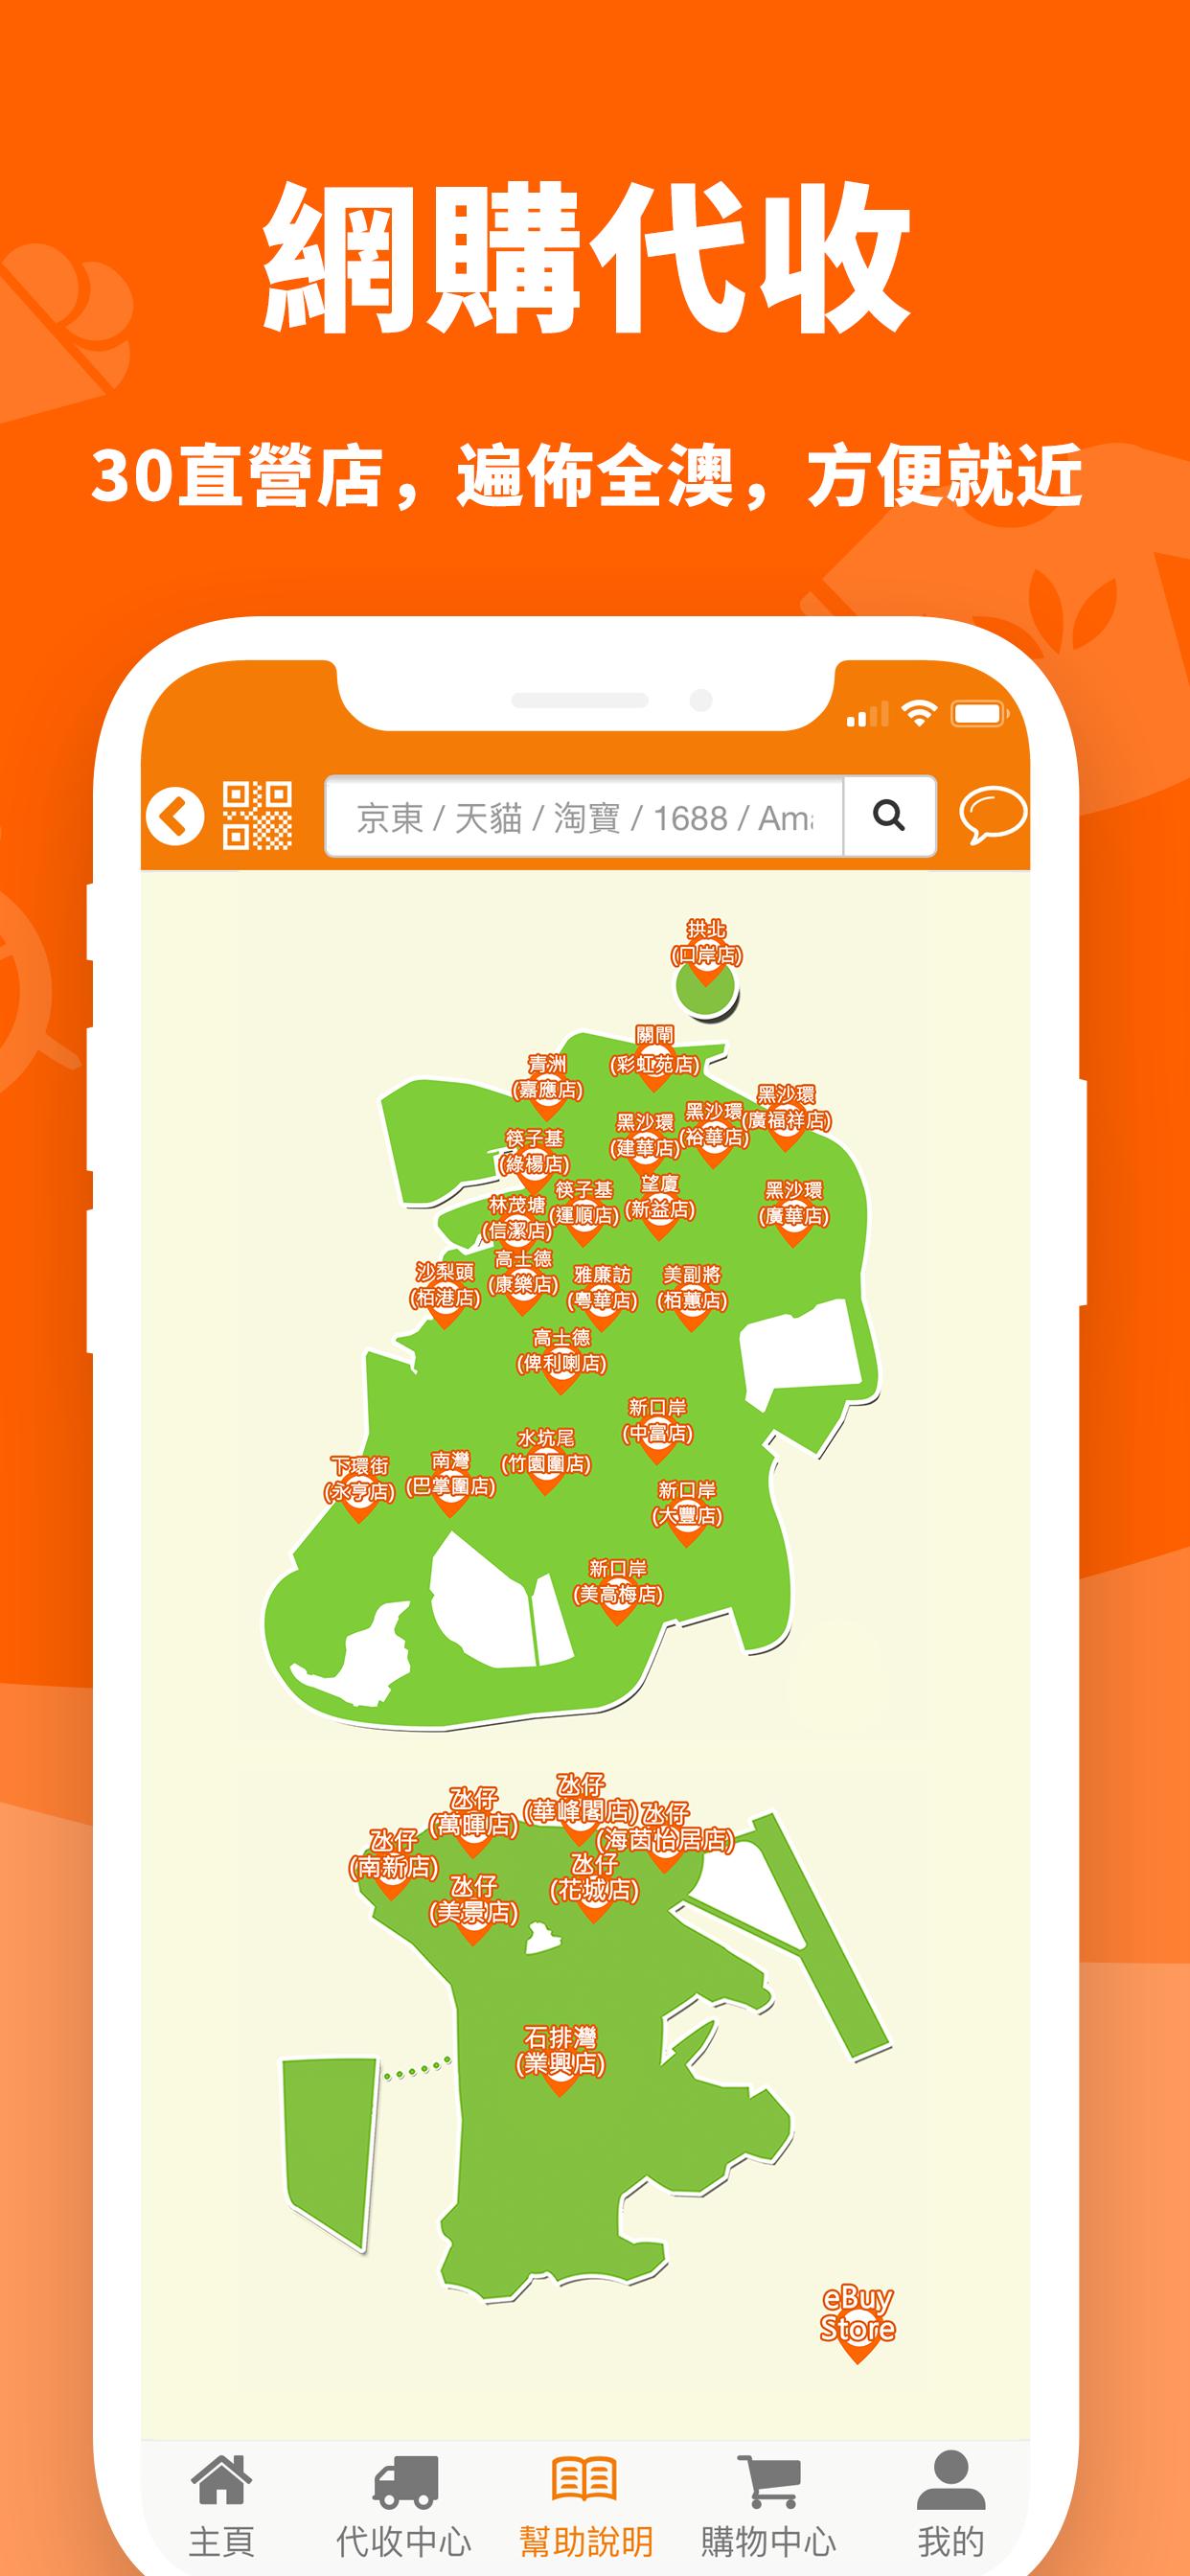 eBuy.mo 澳門易購網 2.1.4 Screenshot 2